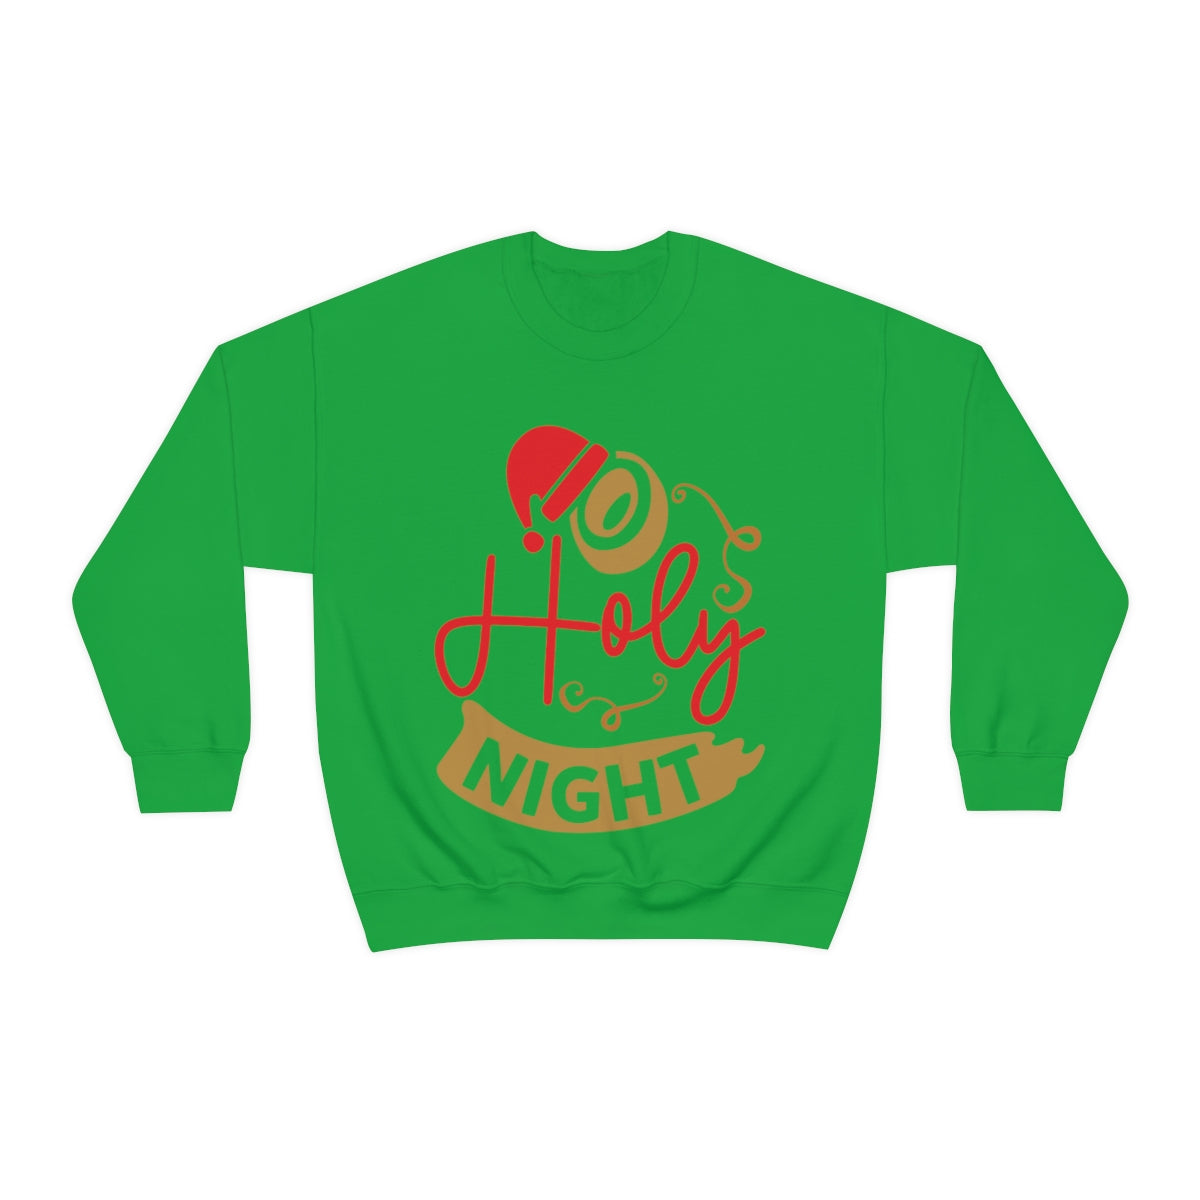 Merry Christmas Unisex Sweatshirts , Sweatshirt , Women Sweatshirt , Men Sweatshirt ,Crewneck Sweatshirt, O Holy Night Printify